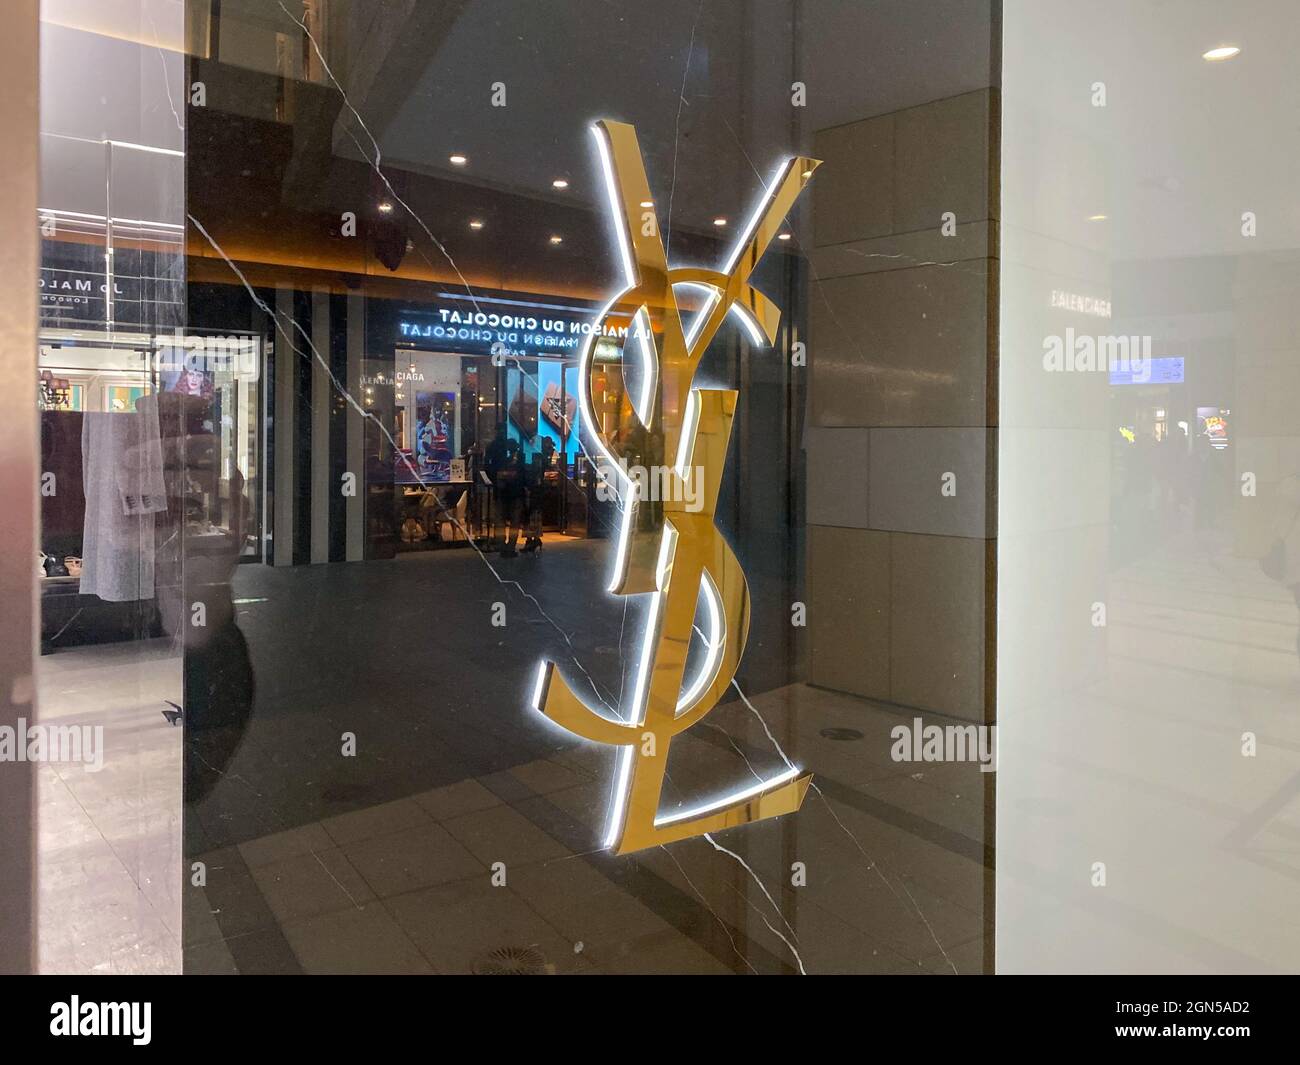 Tokyo, Japan - 23 November 2019: YSL Yves Saint Laurent store sign at Ginza district in Tokyo, Japan. Stock Photo